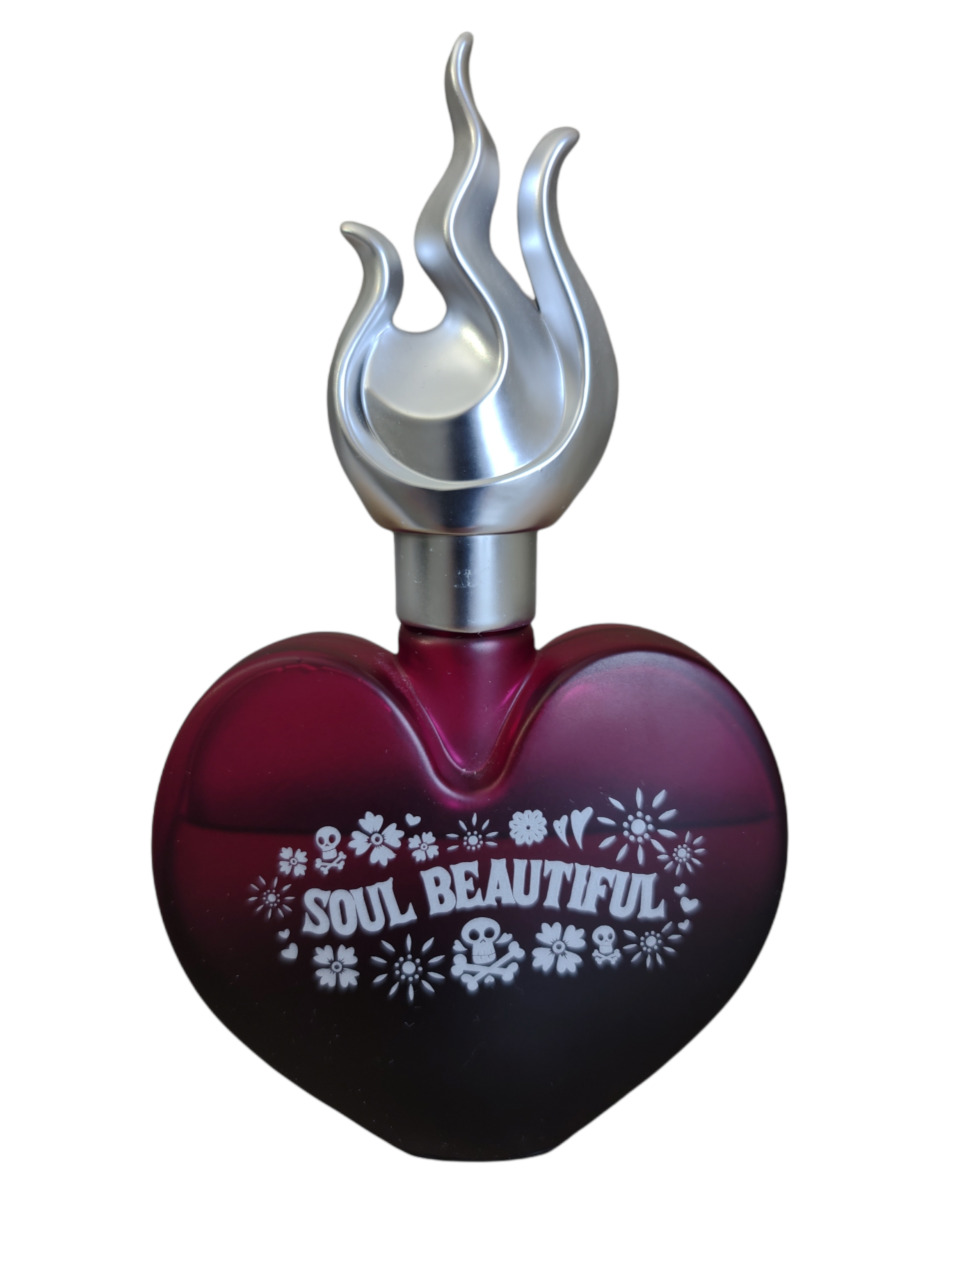 Rare *Soul Beautiful* Perfume Heart Bottle 2014 The Book of Life Fox & Reel FX 